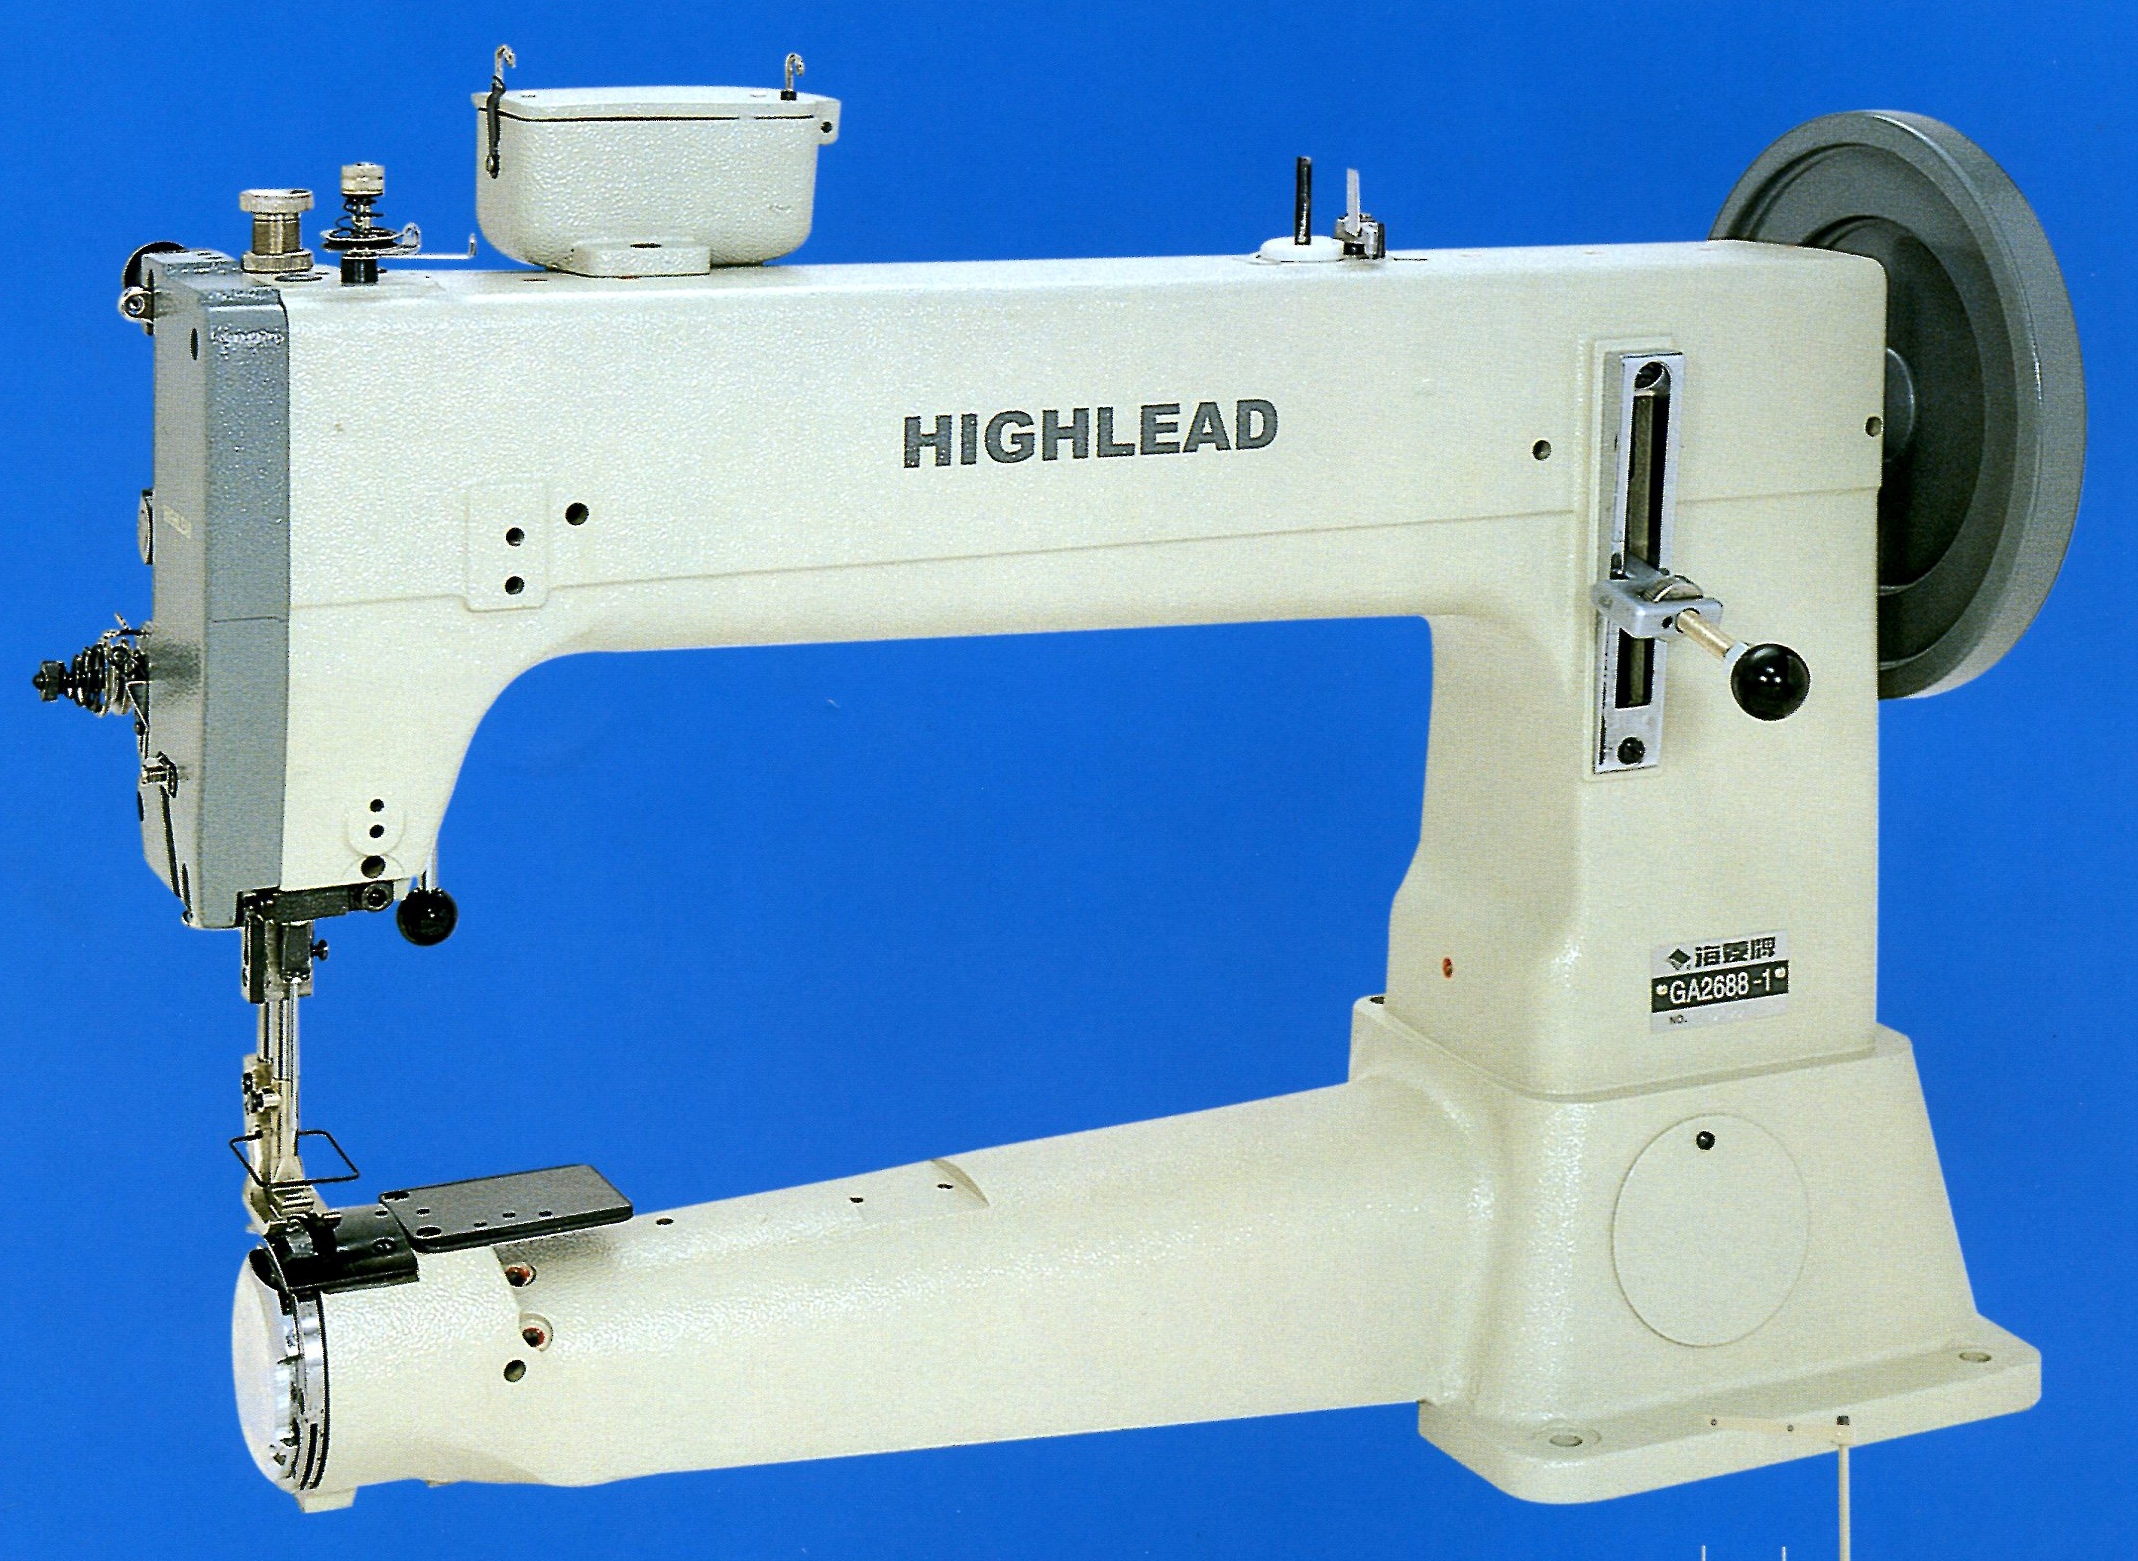 Highlead GA-2688-1 Sewing Machine